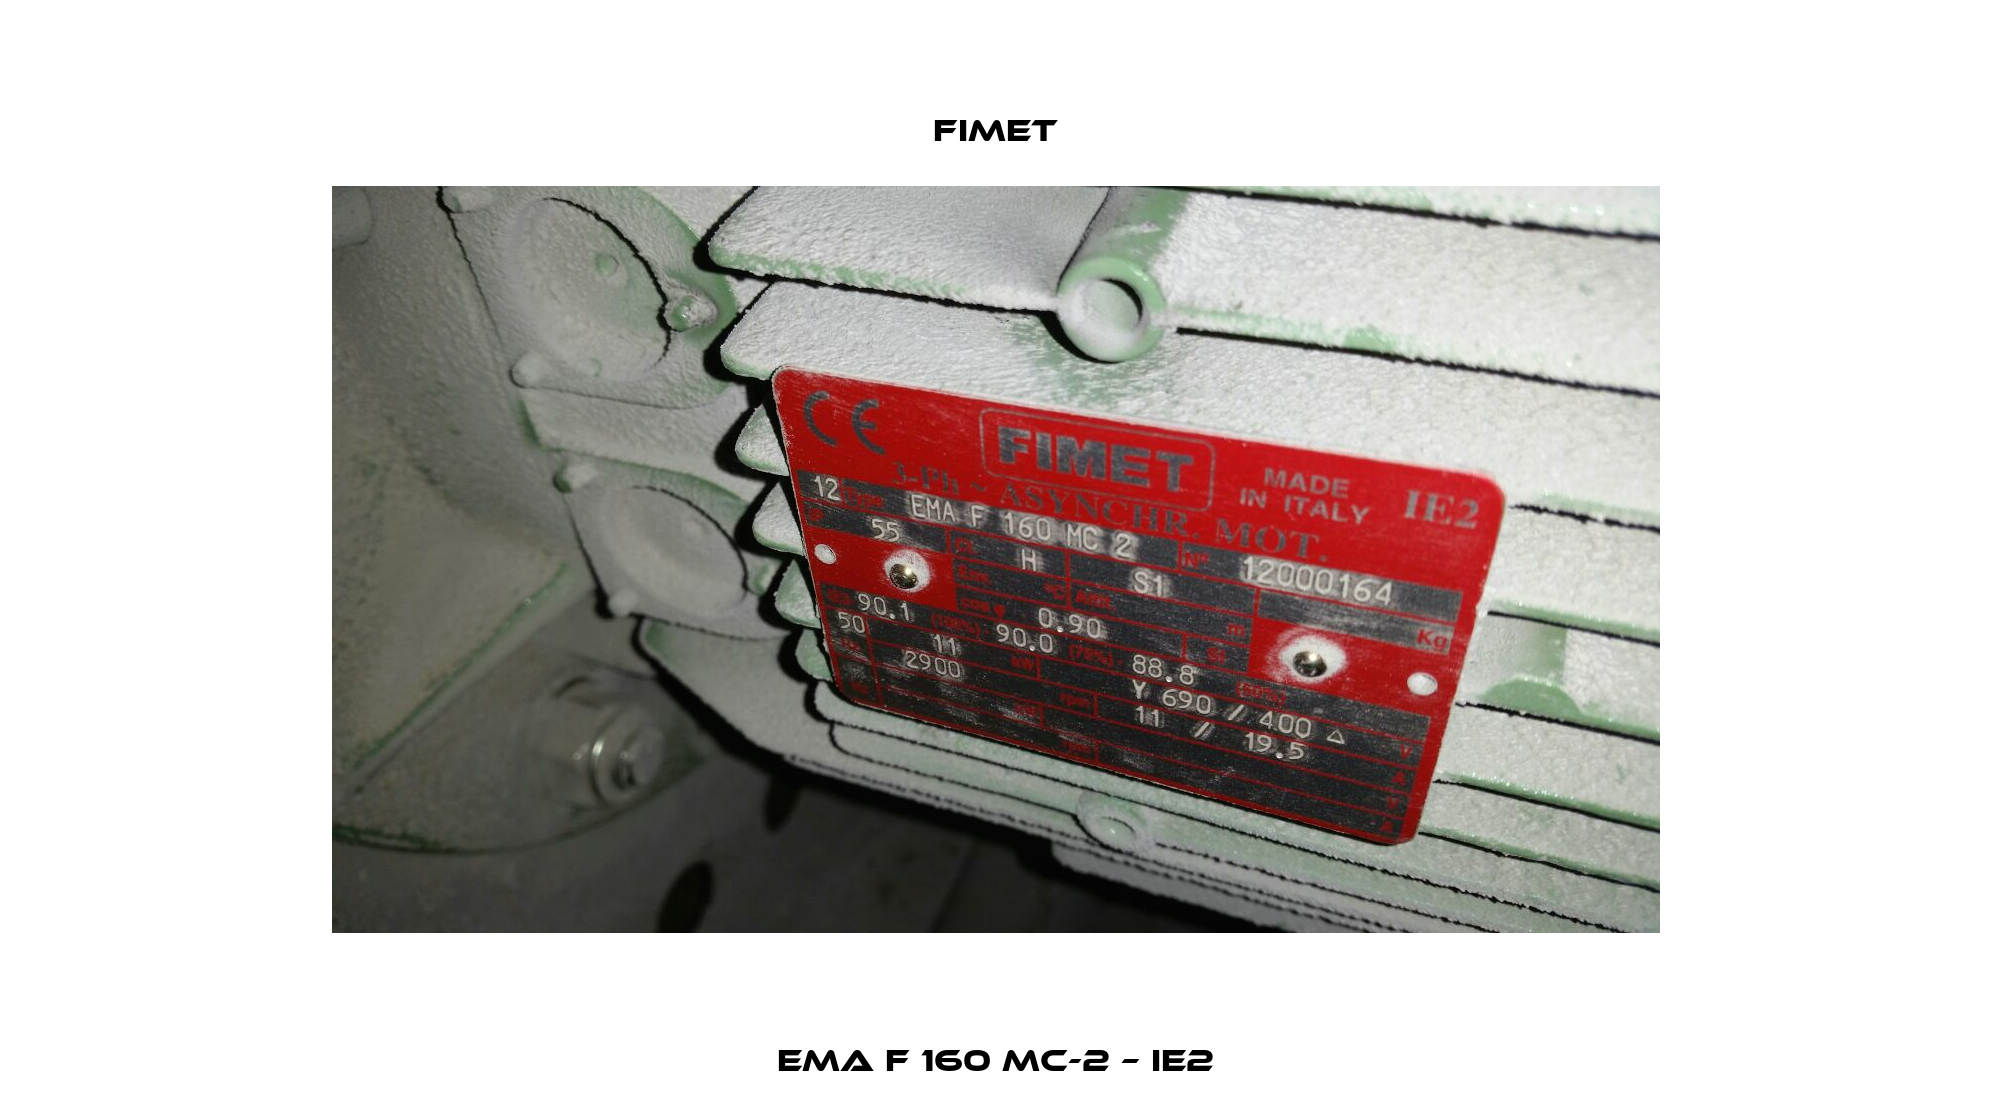 EMA F 160 MC-2 – IE2 Fimet